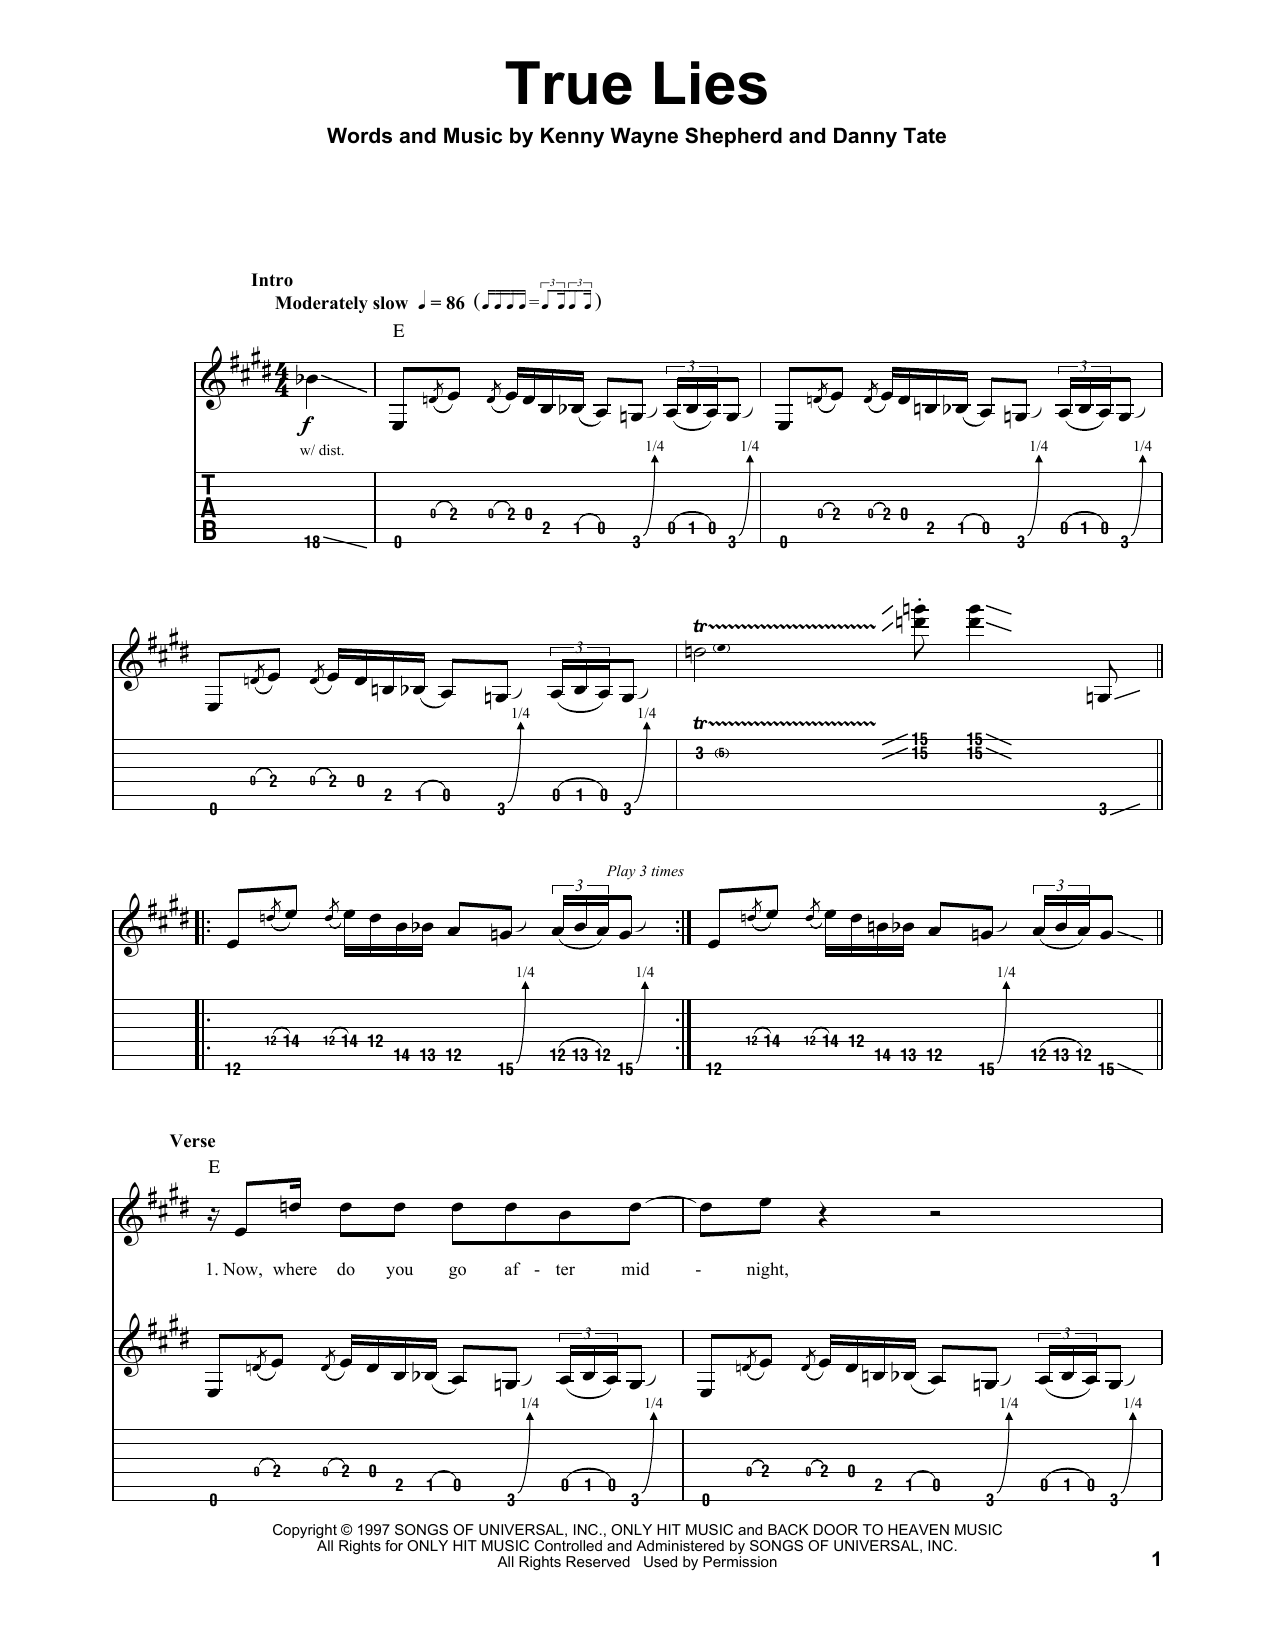 Download Kenny Wayne Shepherd True Lies Sheet Music and learn how to play Guitar Tab PDF digital score in minutes